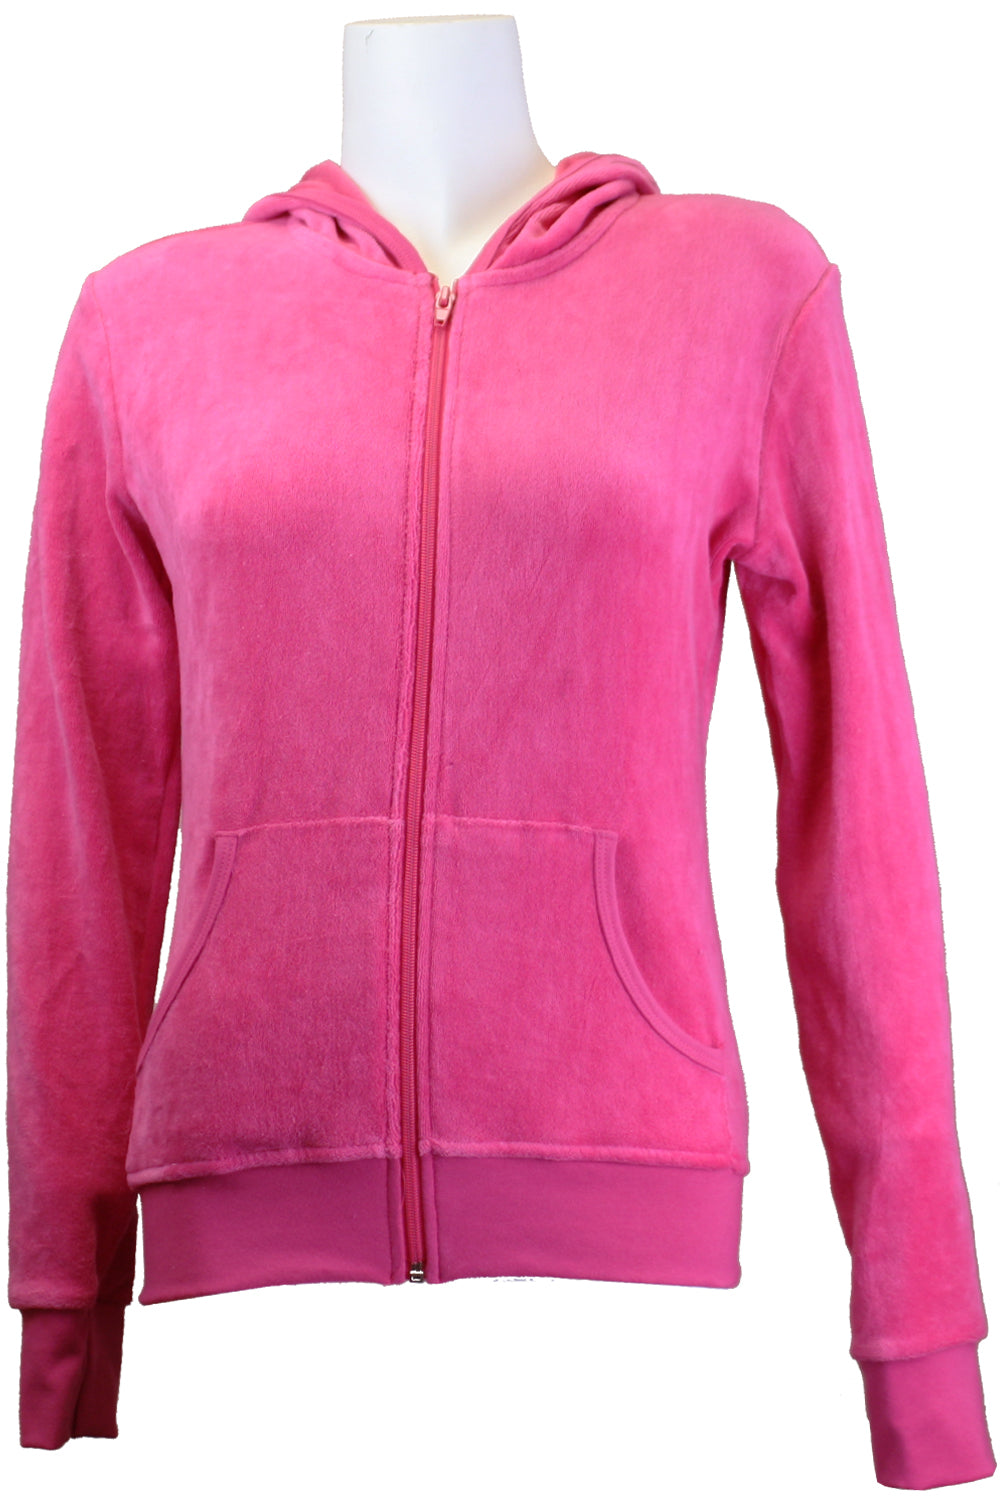 Womens Hot Pink Hoodie   Velour Track Jacket   Sweatsedo